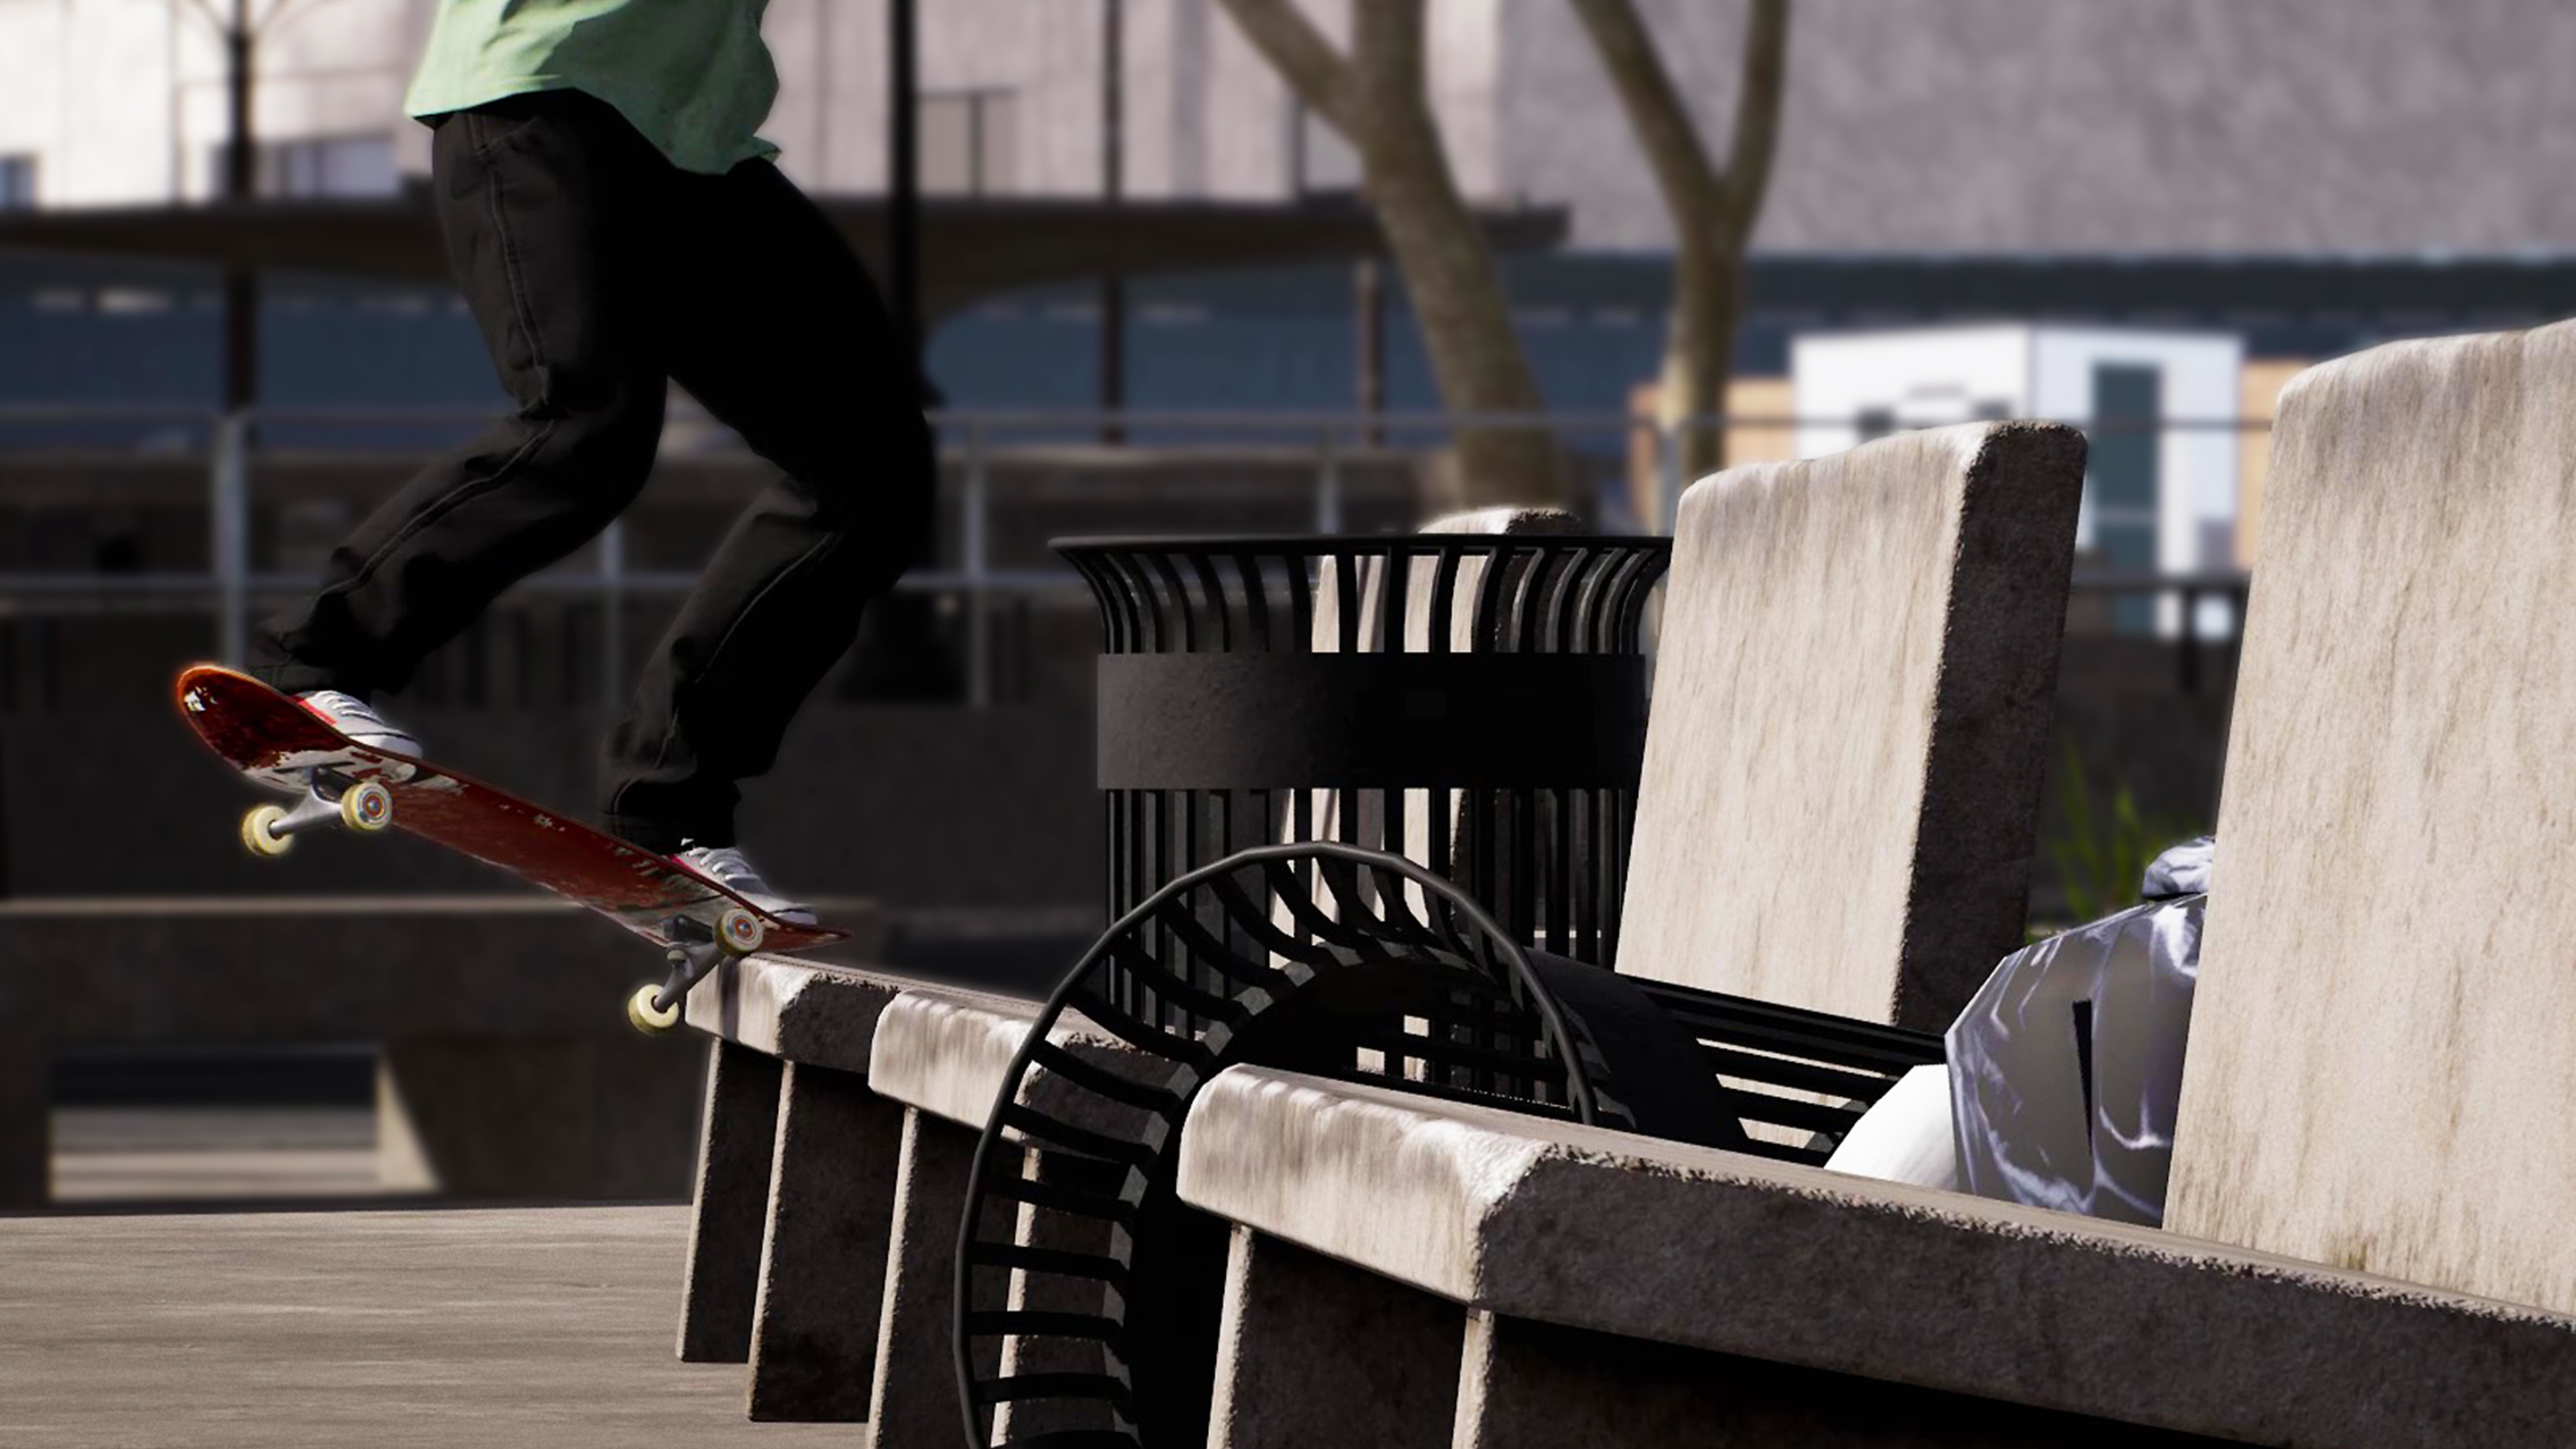 《Session:Skate Sim》截屏，显示一名滑板玩家在辗磨长椅